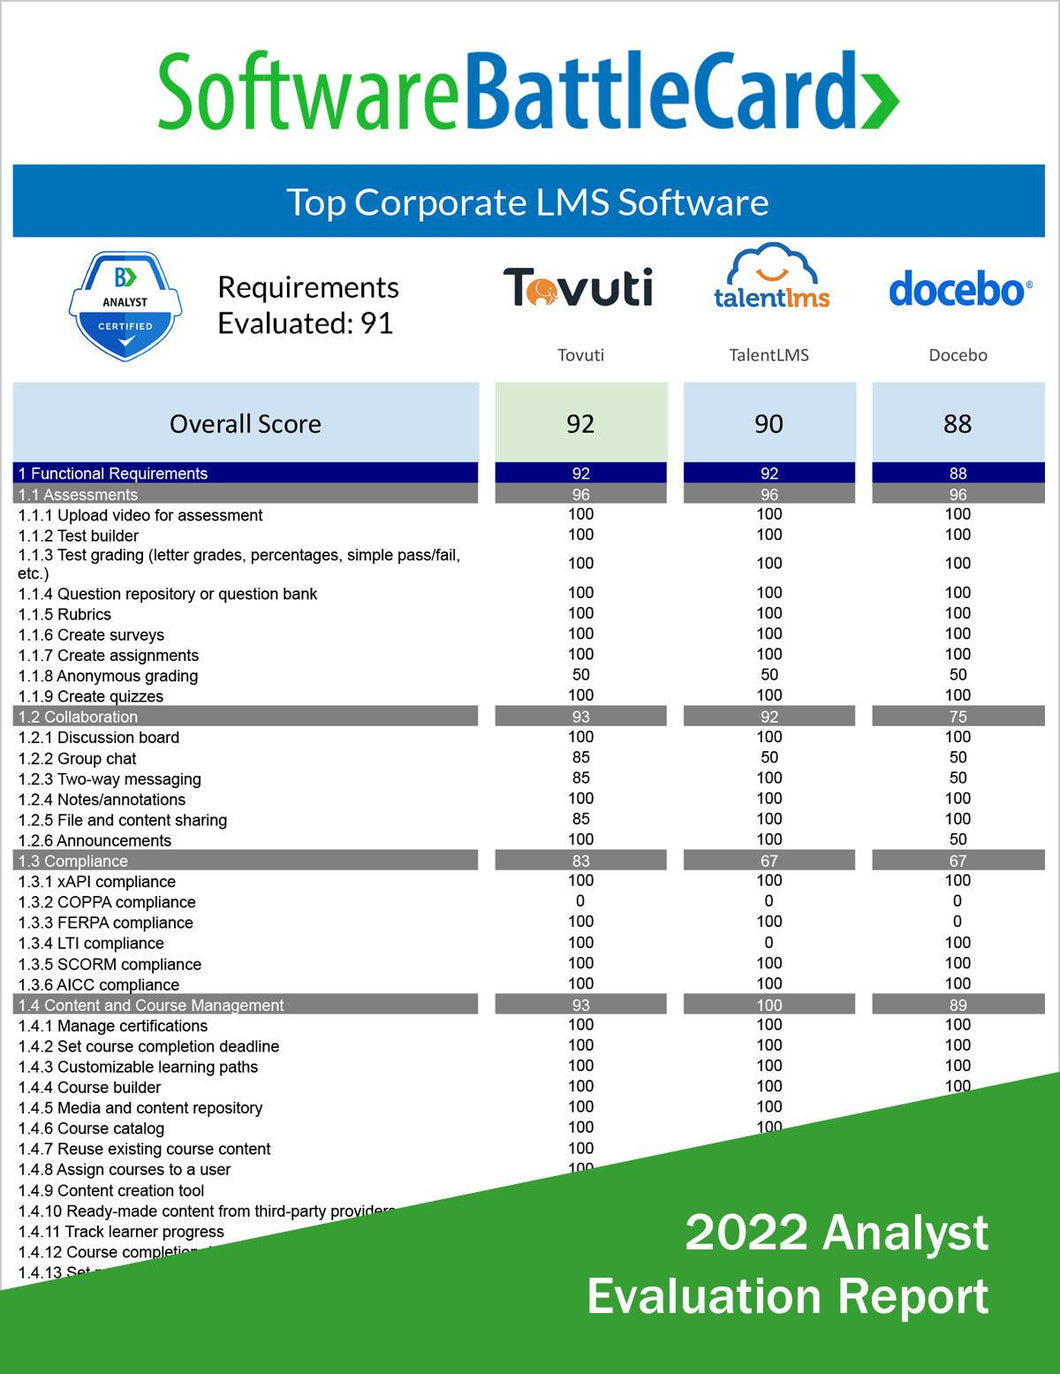 Corporate LMS Software BattleCard: Tovuti vs. TalentLMS vs. Docebo